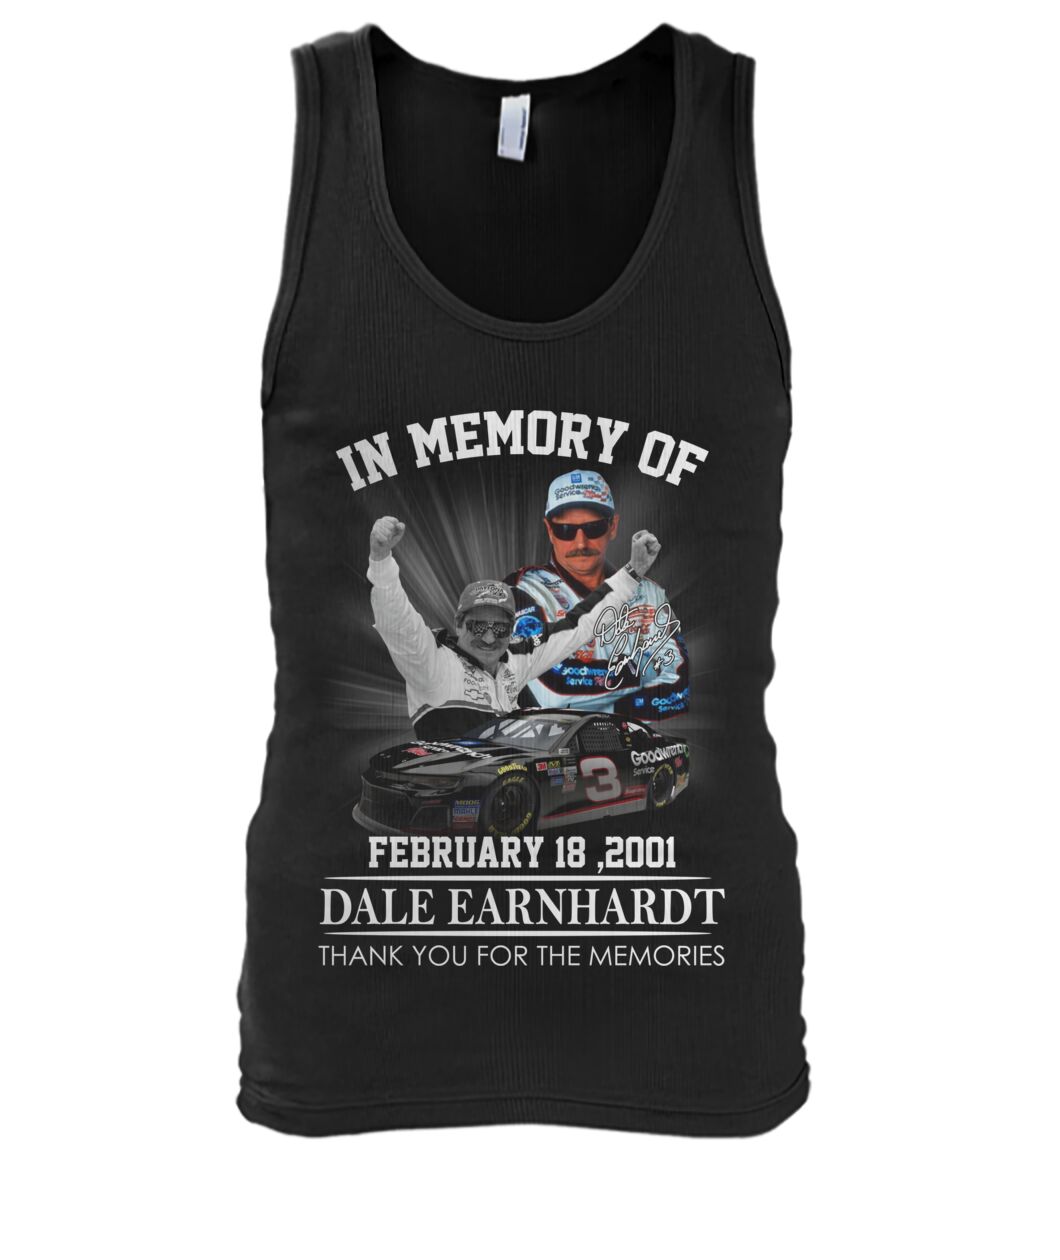 In memory of Dale Earnhardt February 18 2001 tank top